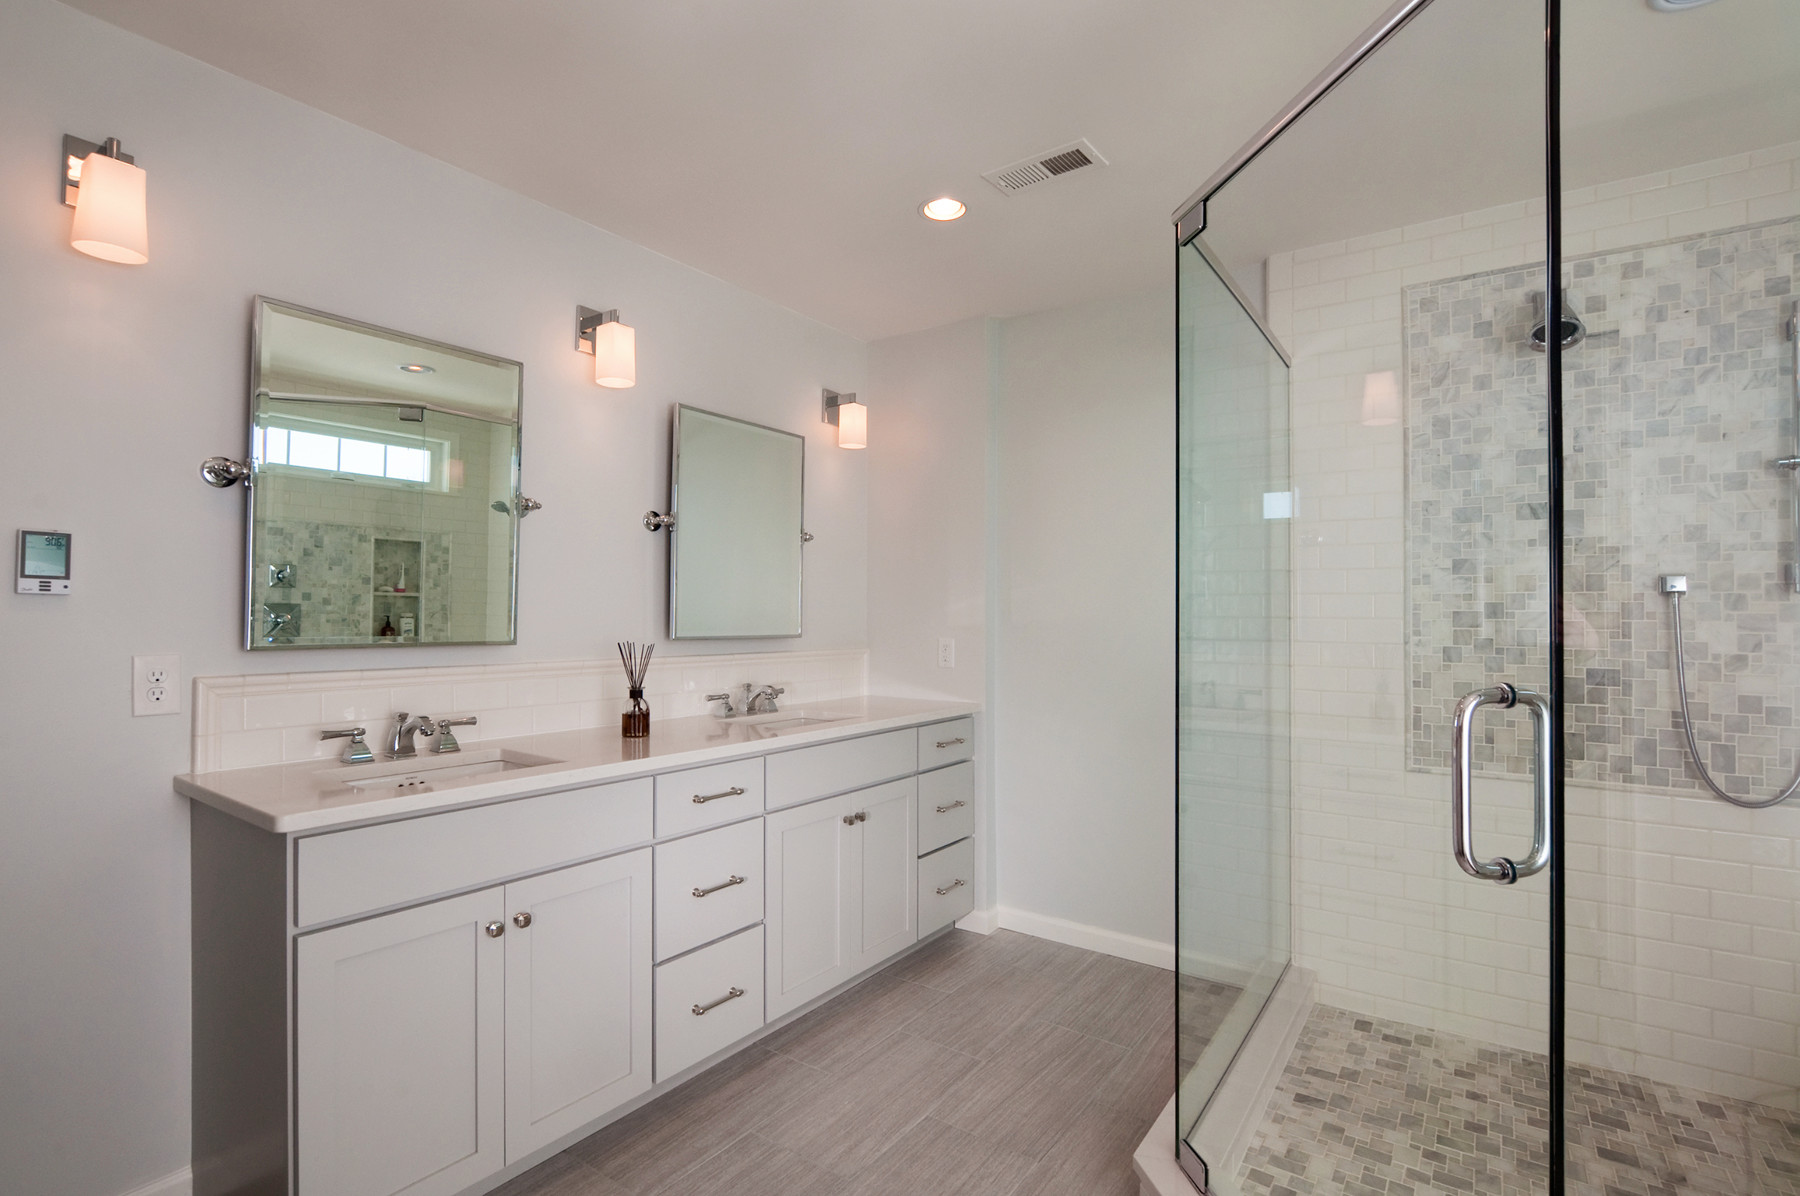 Narrow Depth Double Vanity Transitional Bathroom Philadelphia By Custom Craft Design Build Remodel Houzz